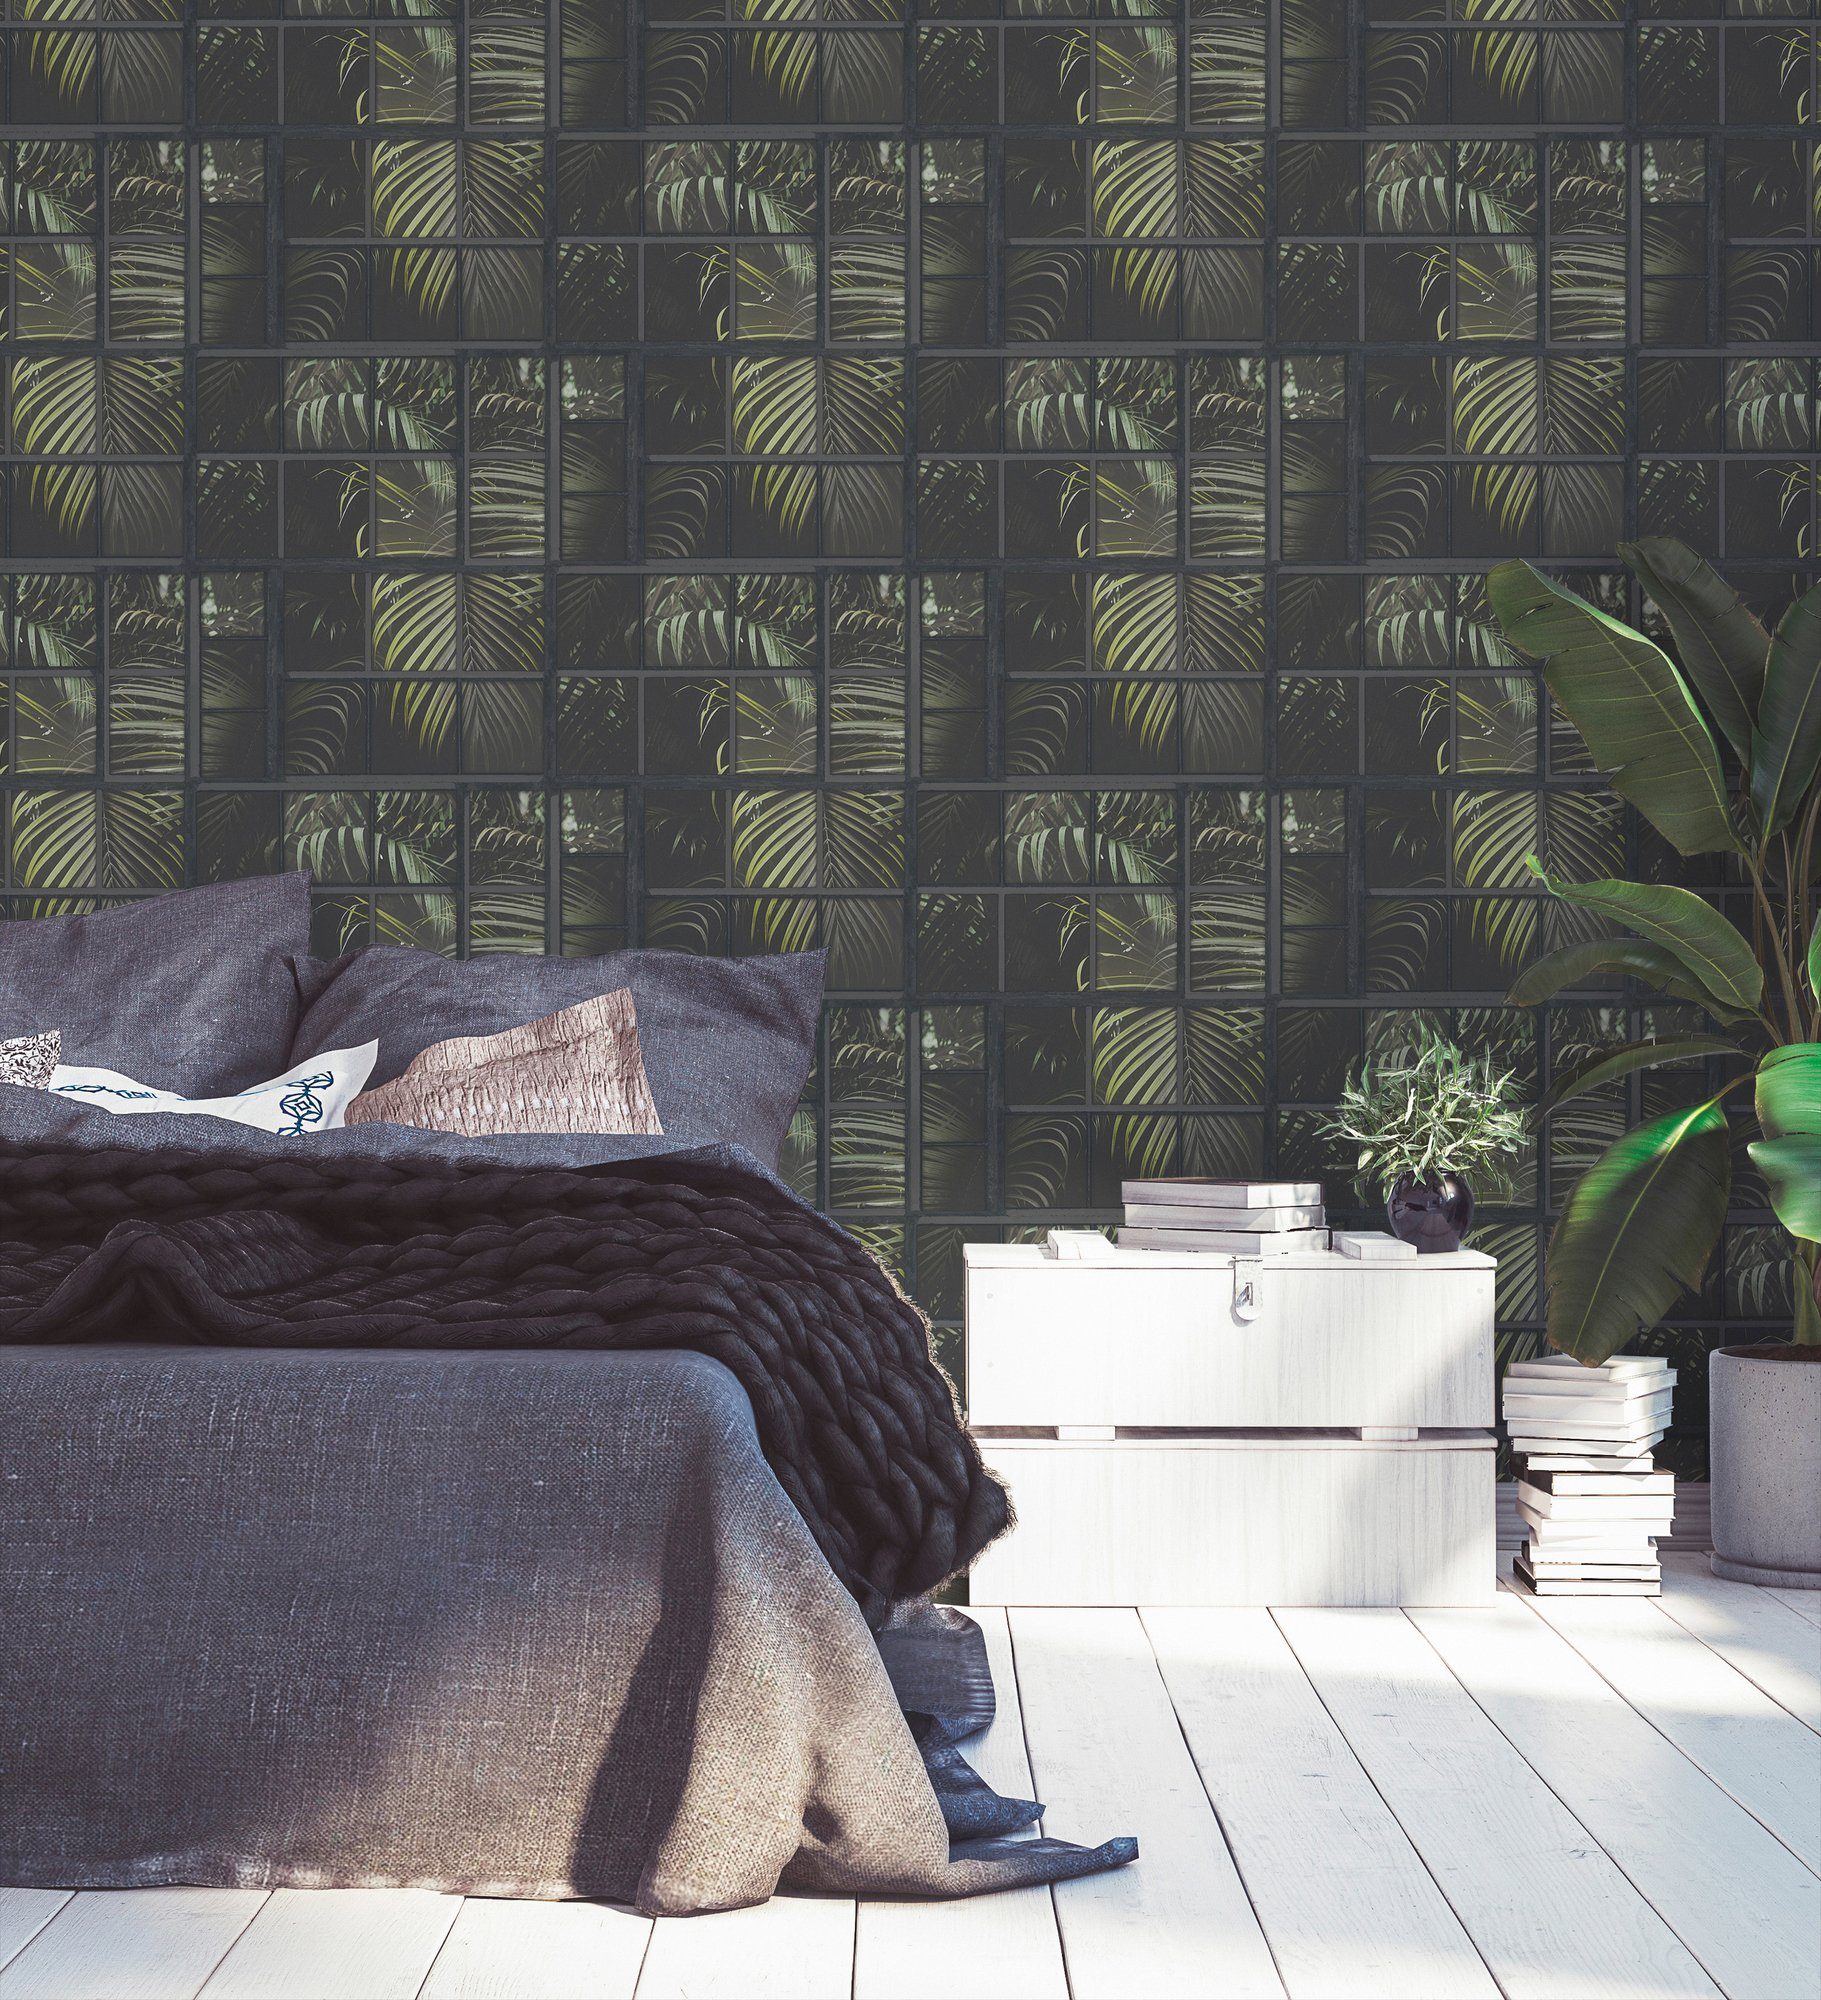 Palmen Dschungeltapete Industrial, schwarz/graugrün floral, Vliestapete botanisch, walls A.S. living Création Tapete